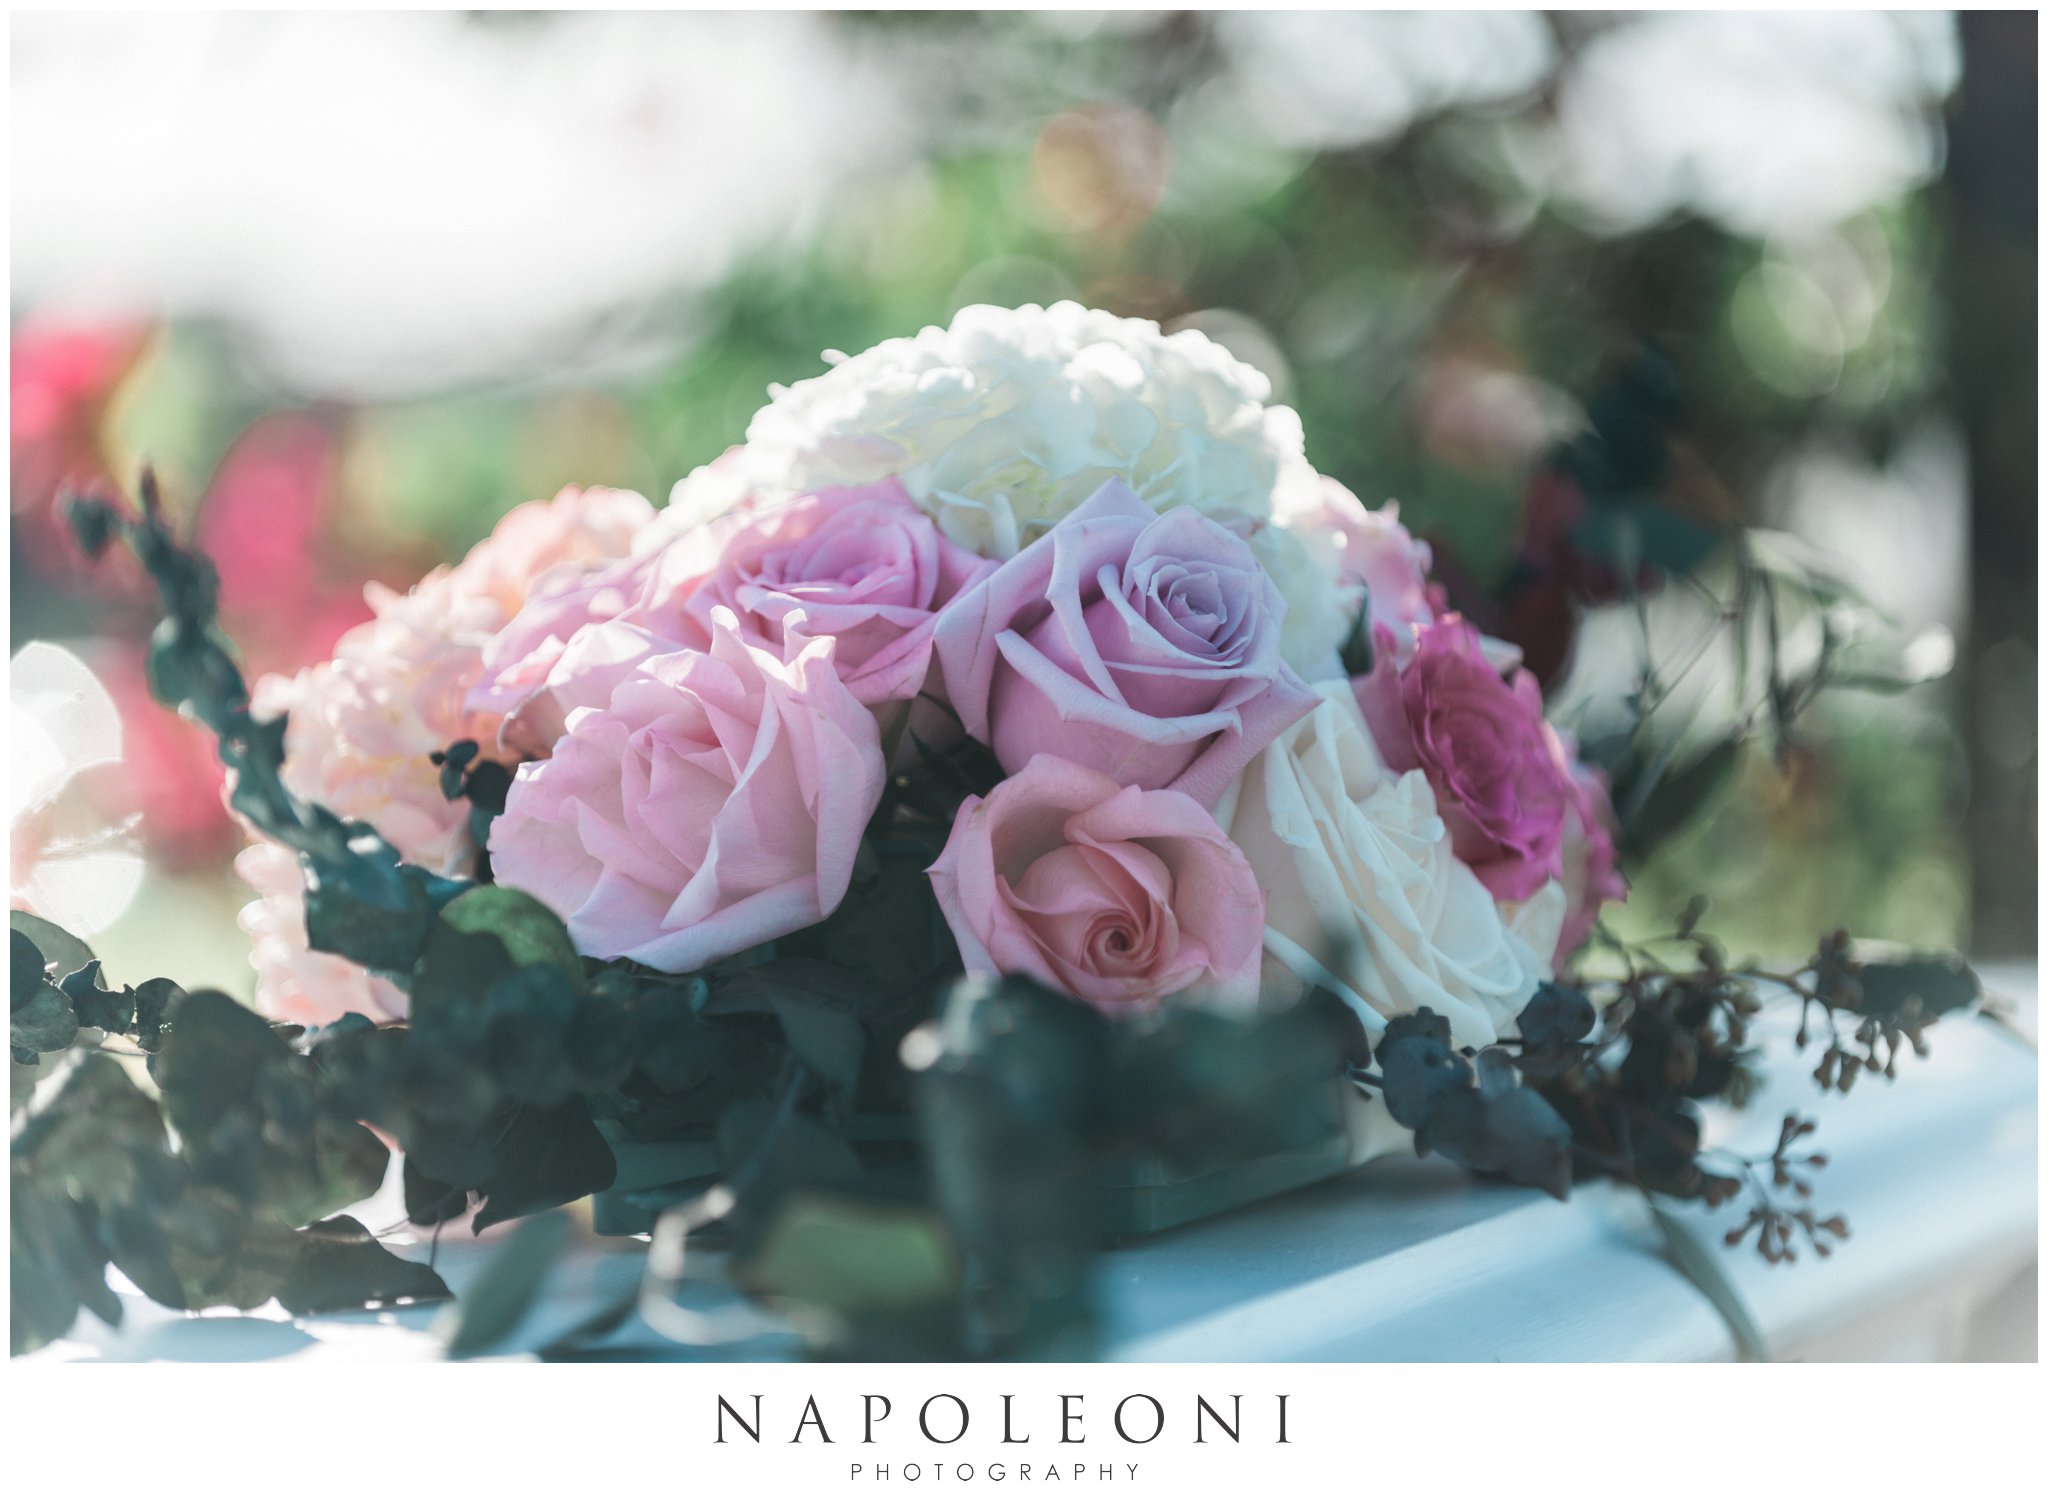 napoleoni-photography_0349a